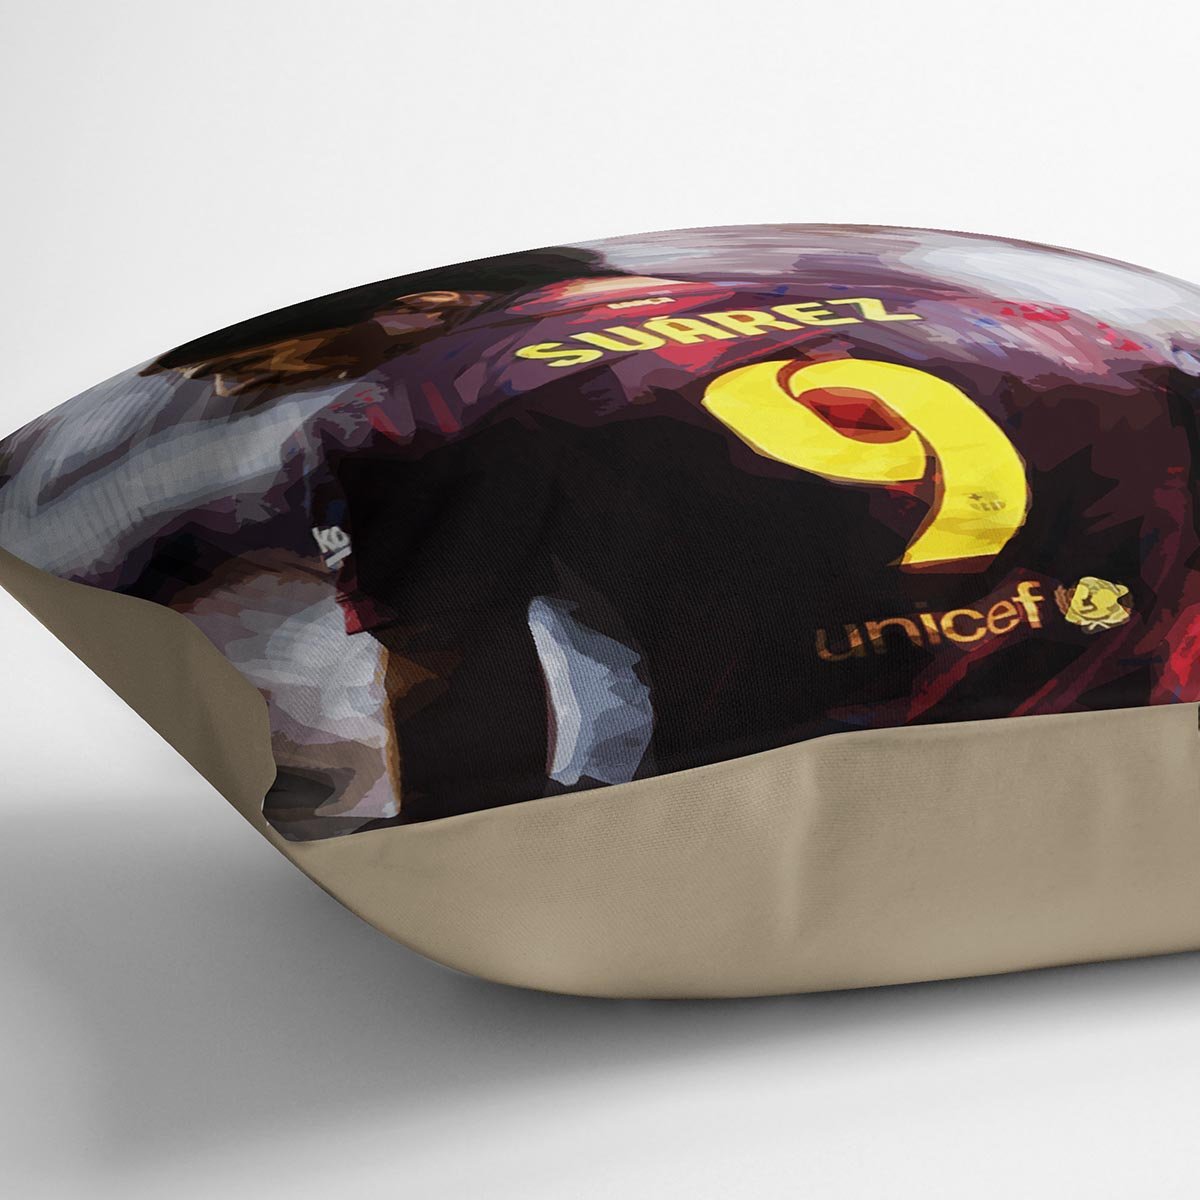 Luis Suarez Barcelona Cushion